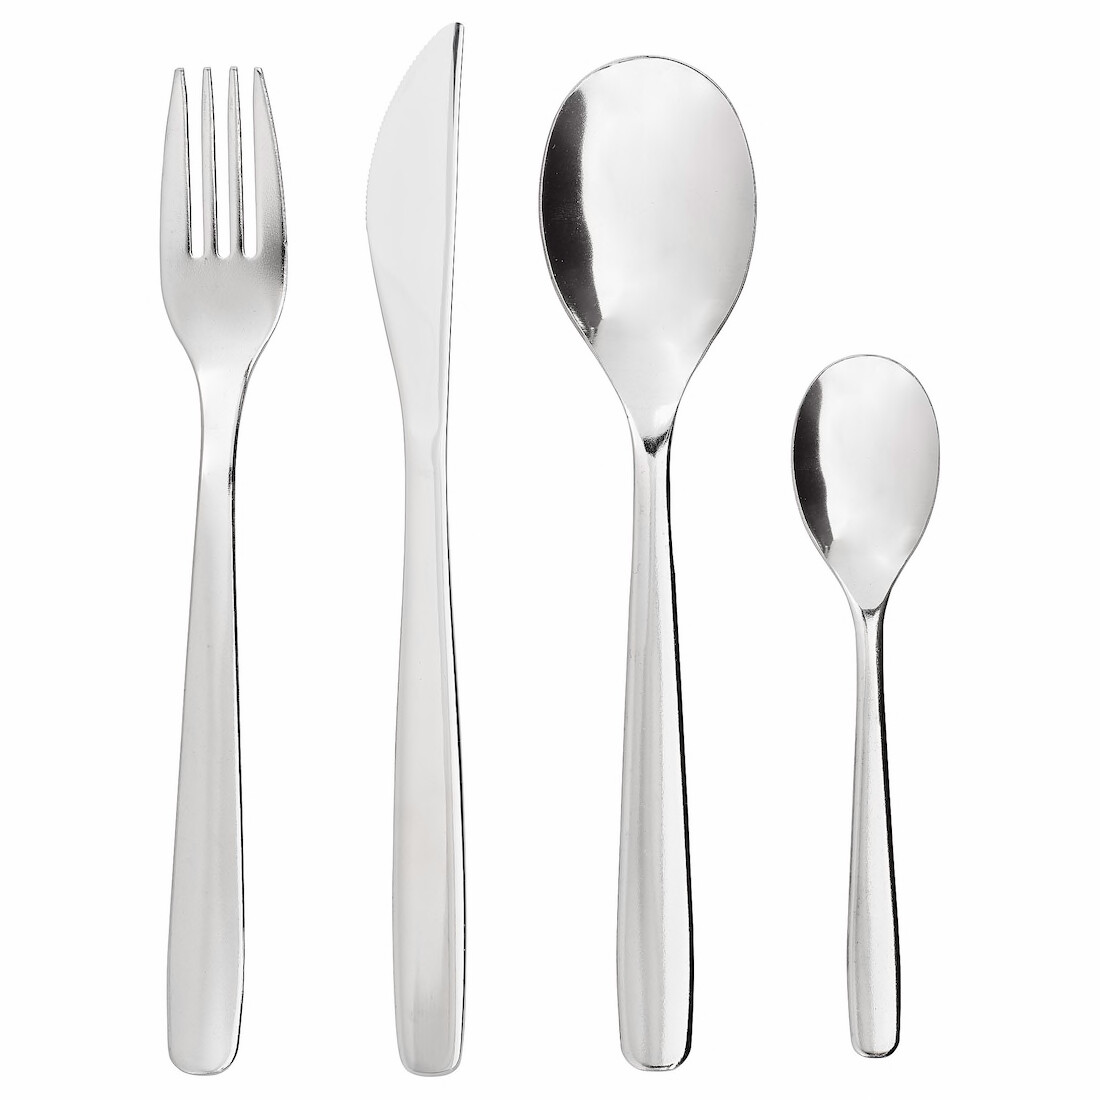 IKEA Mopsig Modern Silverware Cutlery Set 16 Piece Flatware Set - Service For 4 